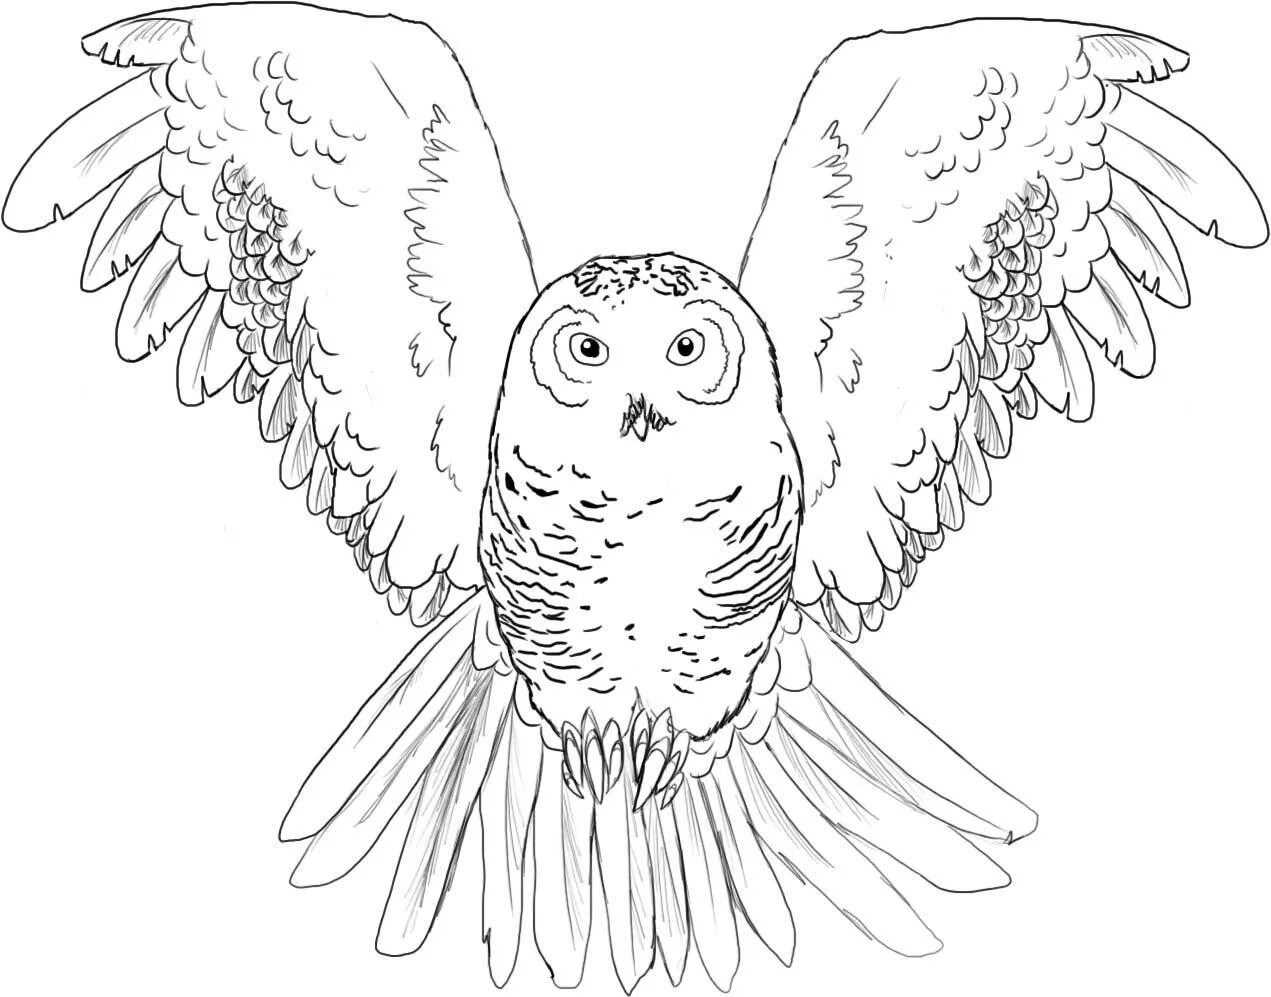 Impressive hedwig owl coloring book